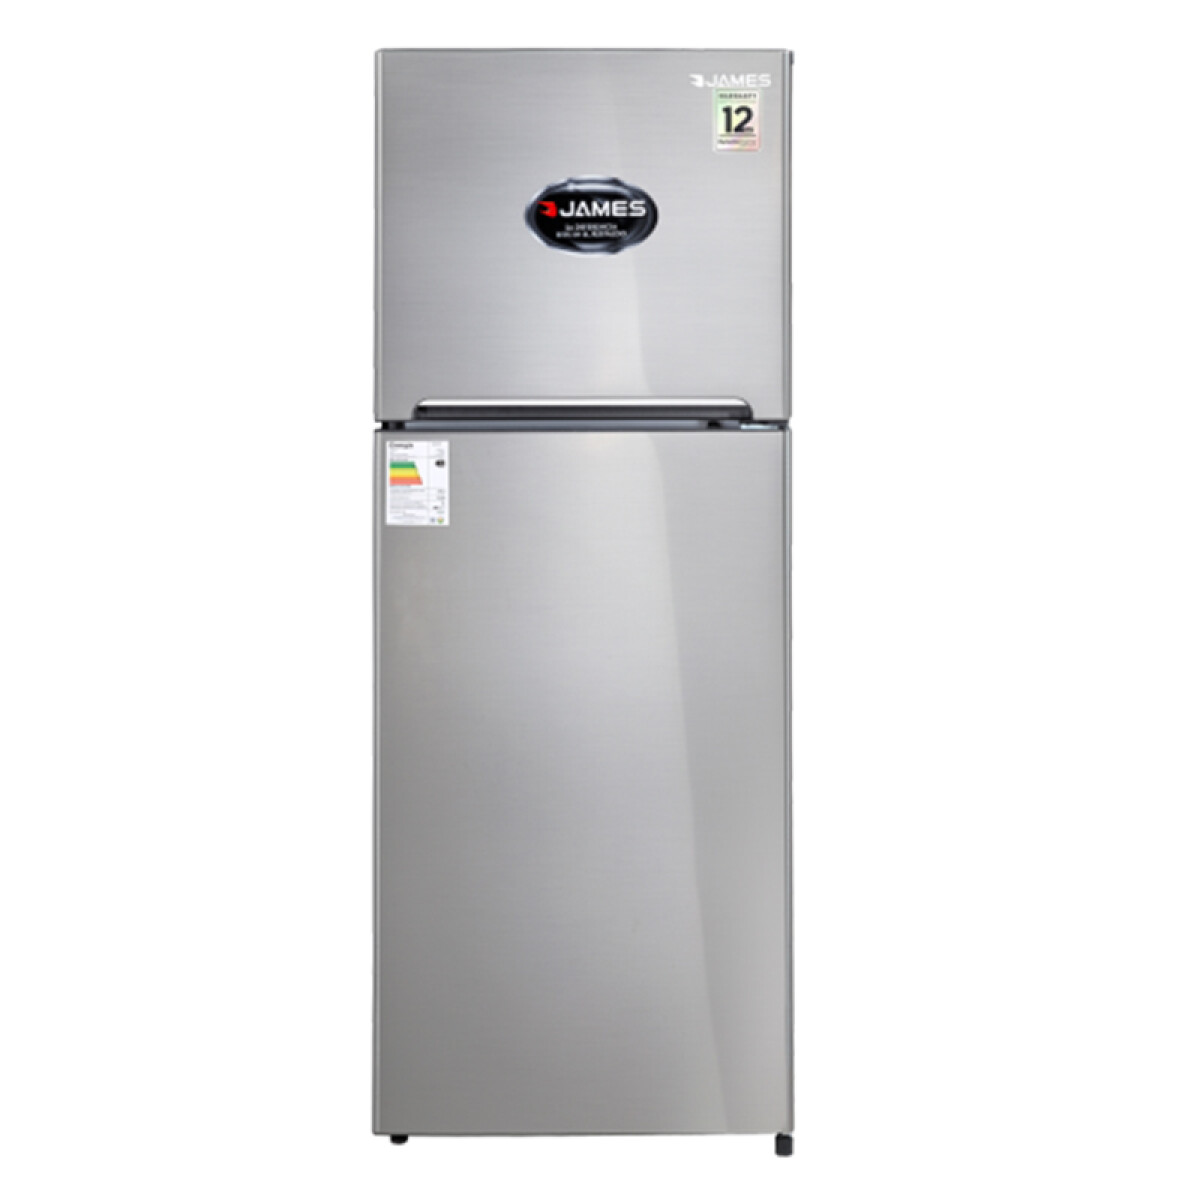 Refrigerador James J 501 INV INOX 